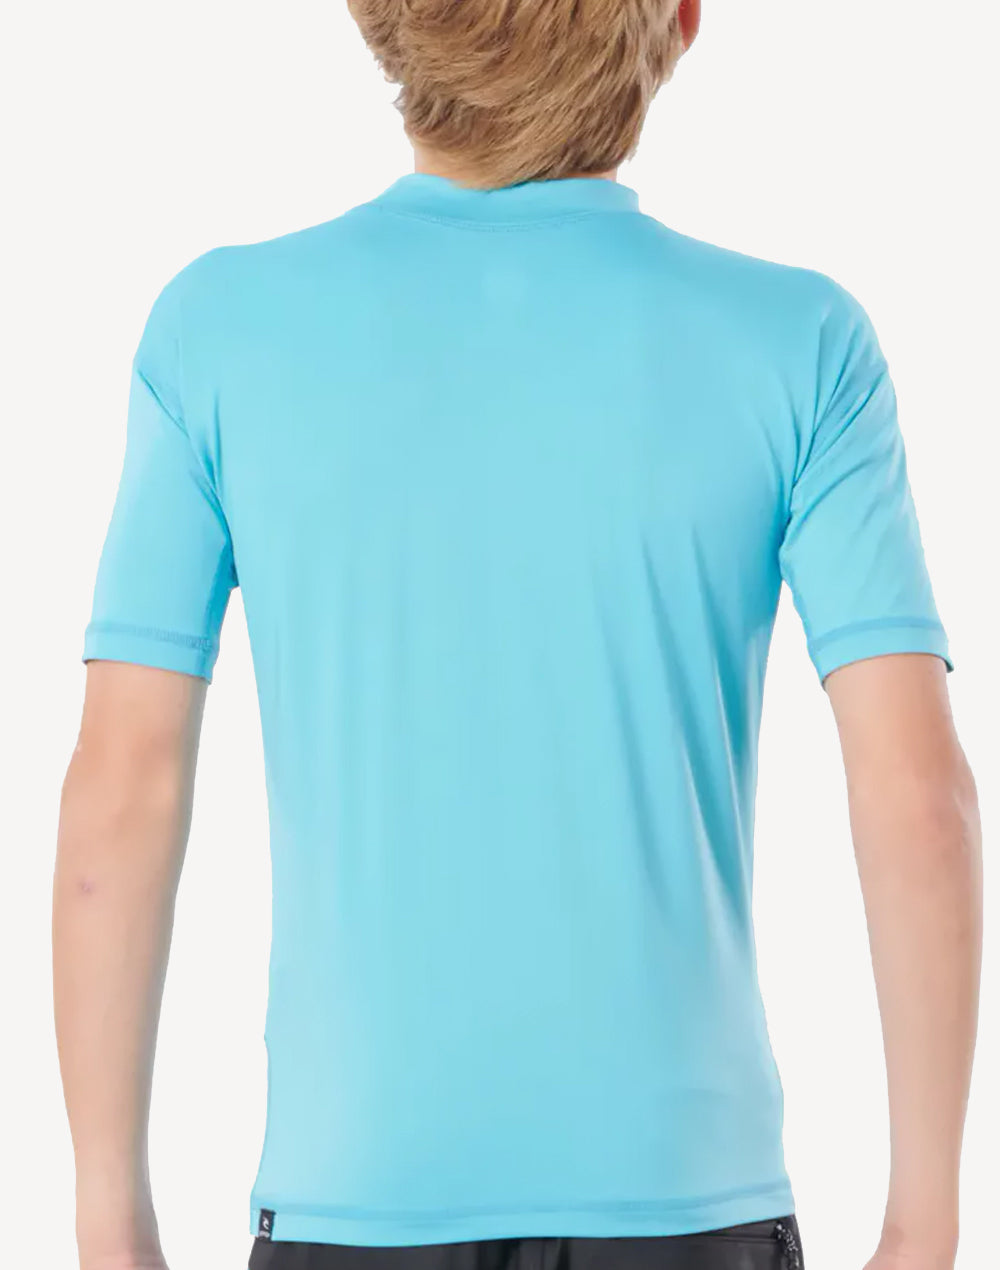 Boys Corp Short Sleeve UV Shirt#color_blue